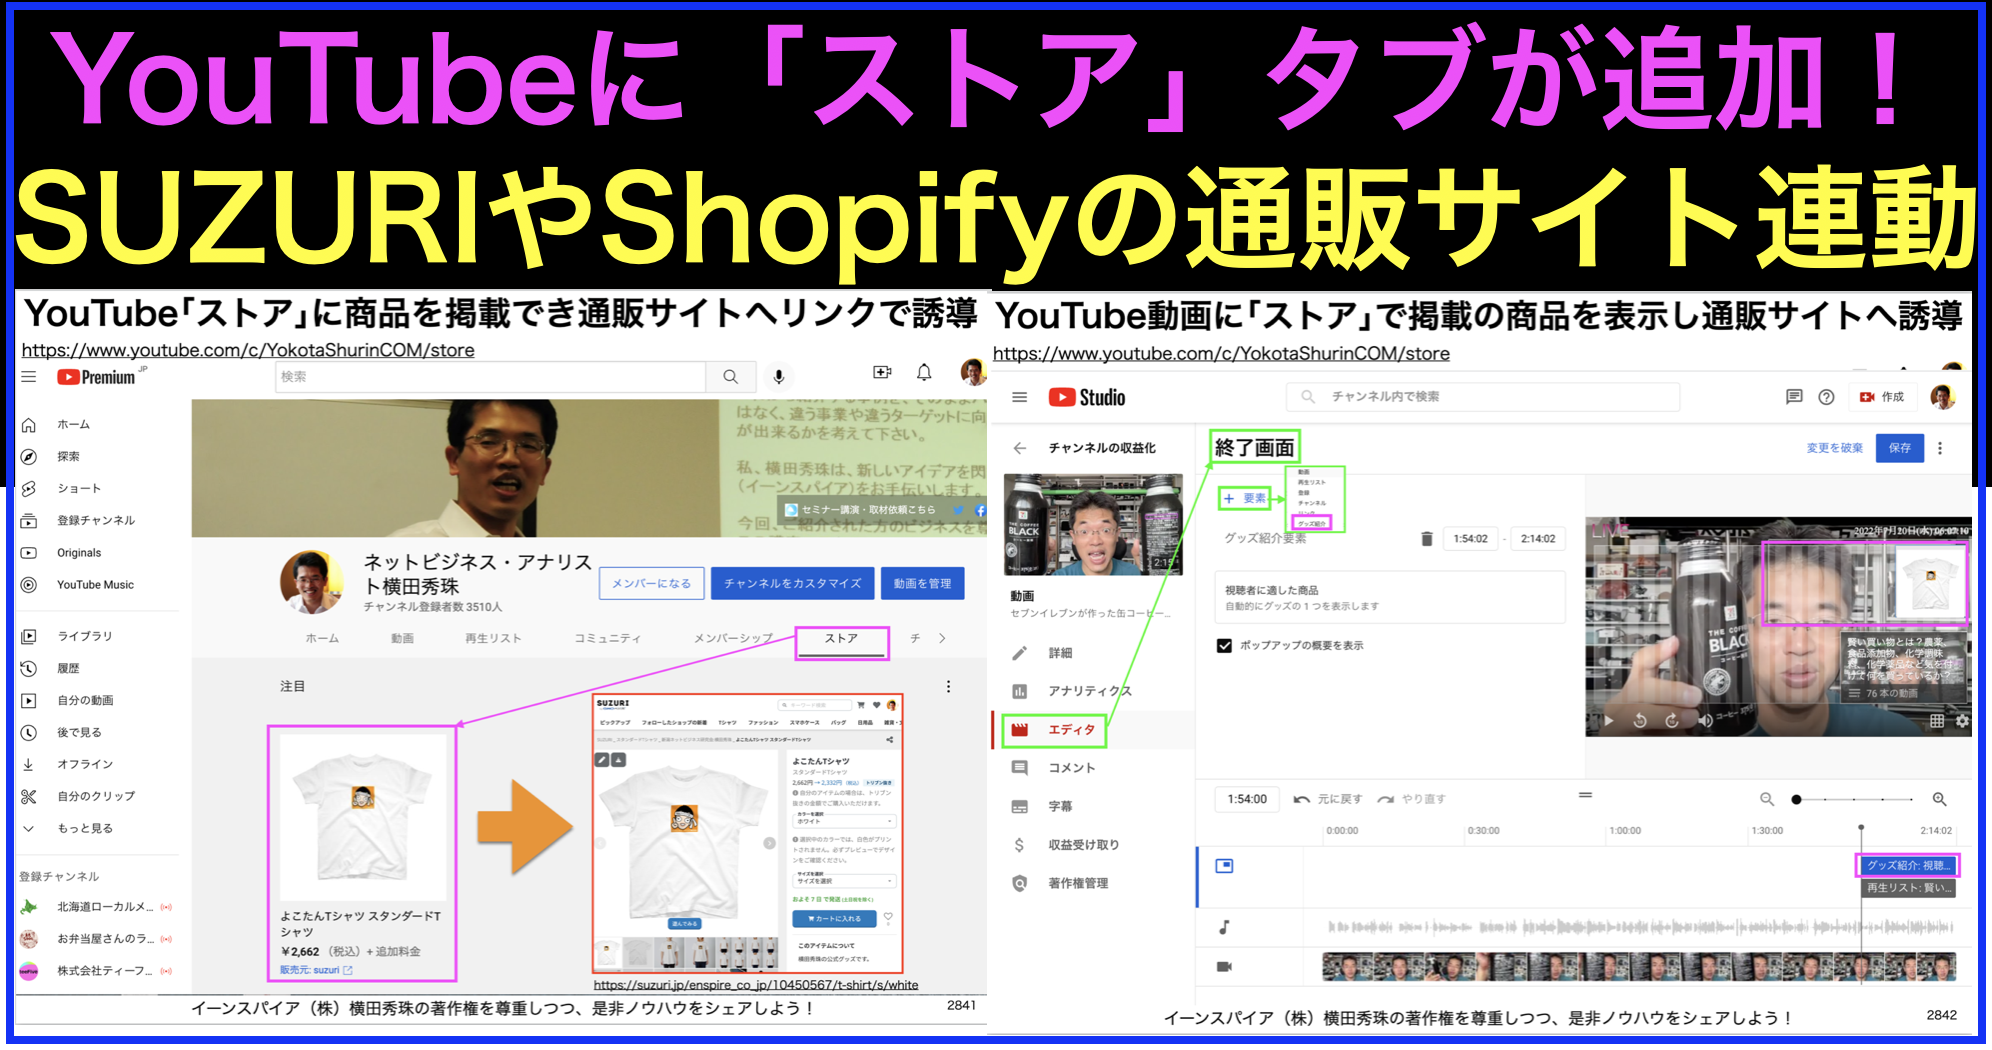 YouTube｢ストア｣でSUZURI･ShopifyなどEC誘導が可能へ